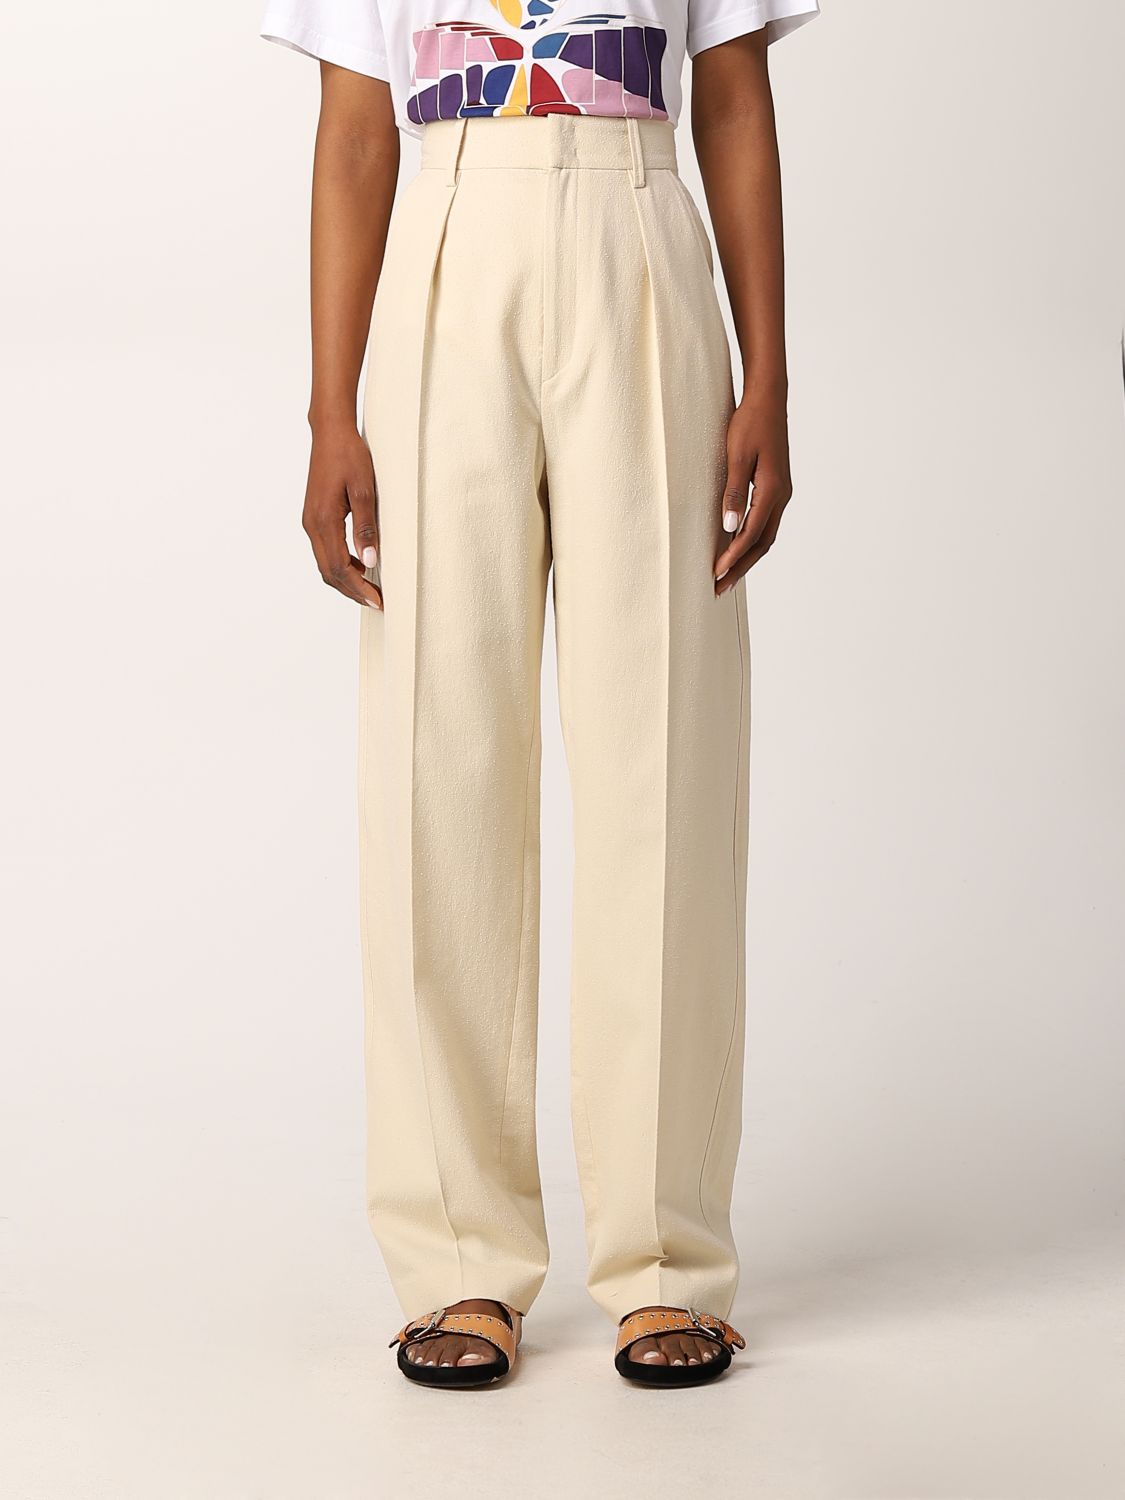 Isabel Marant Etoile pants in cotton blend